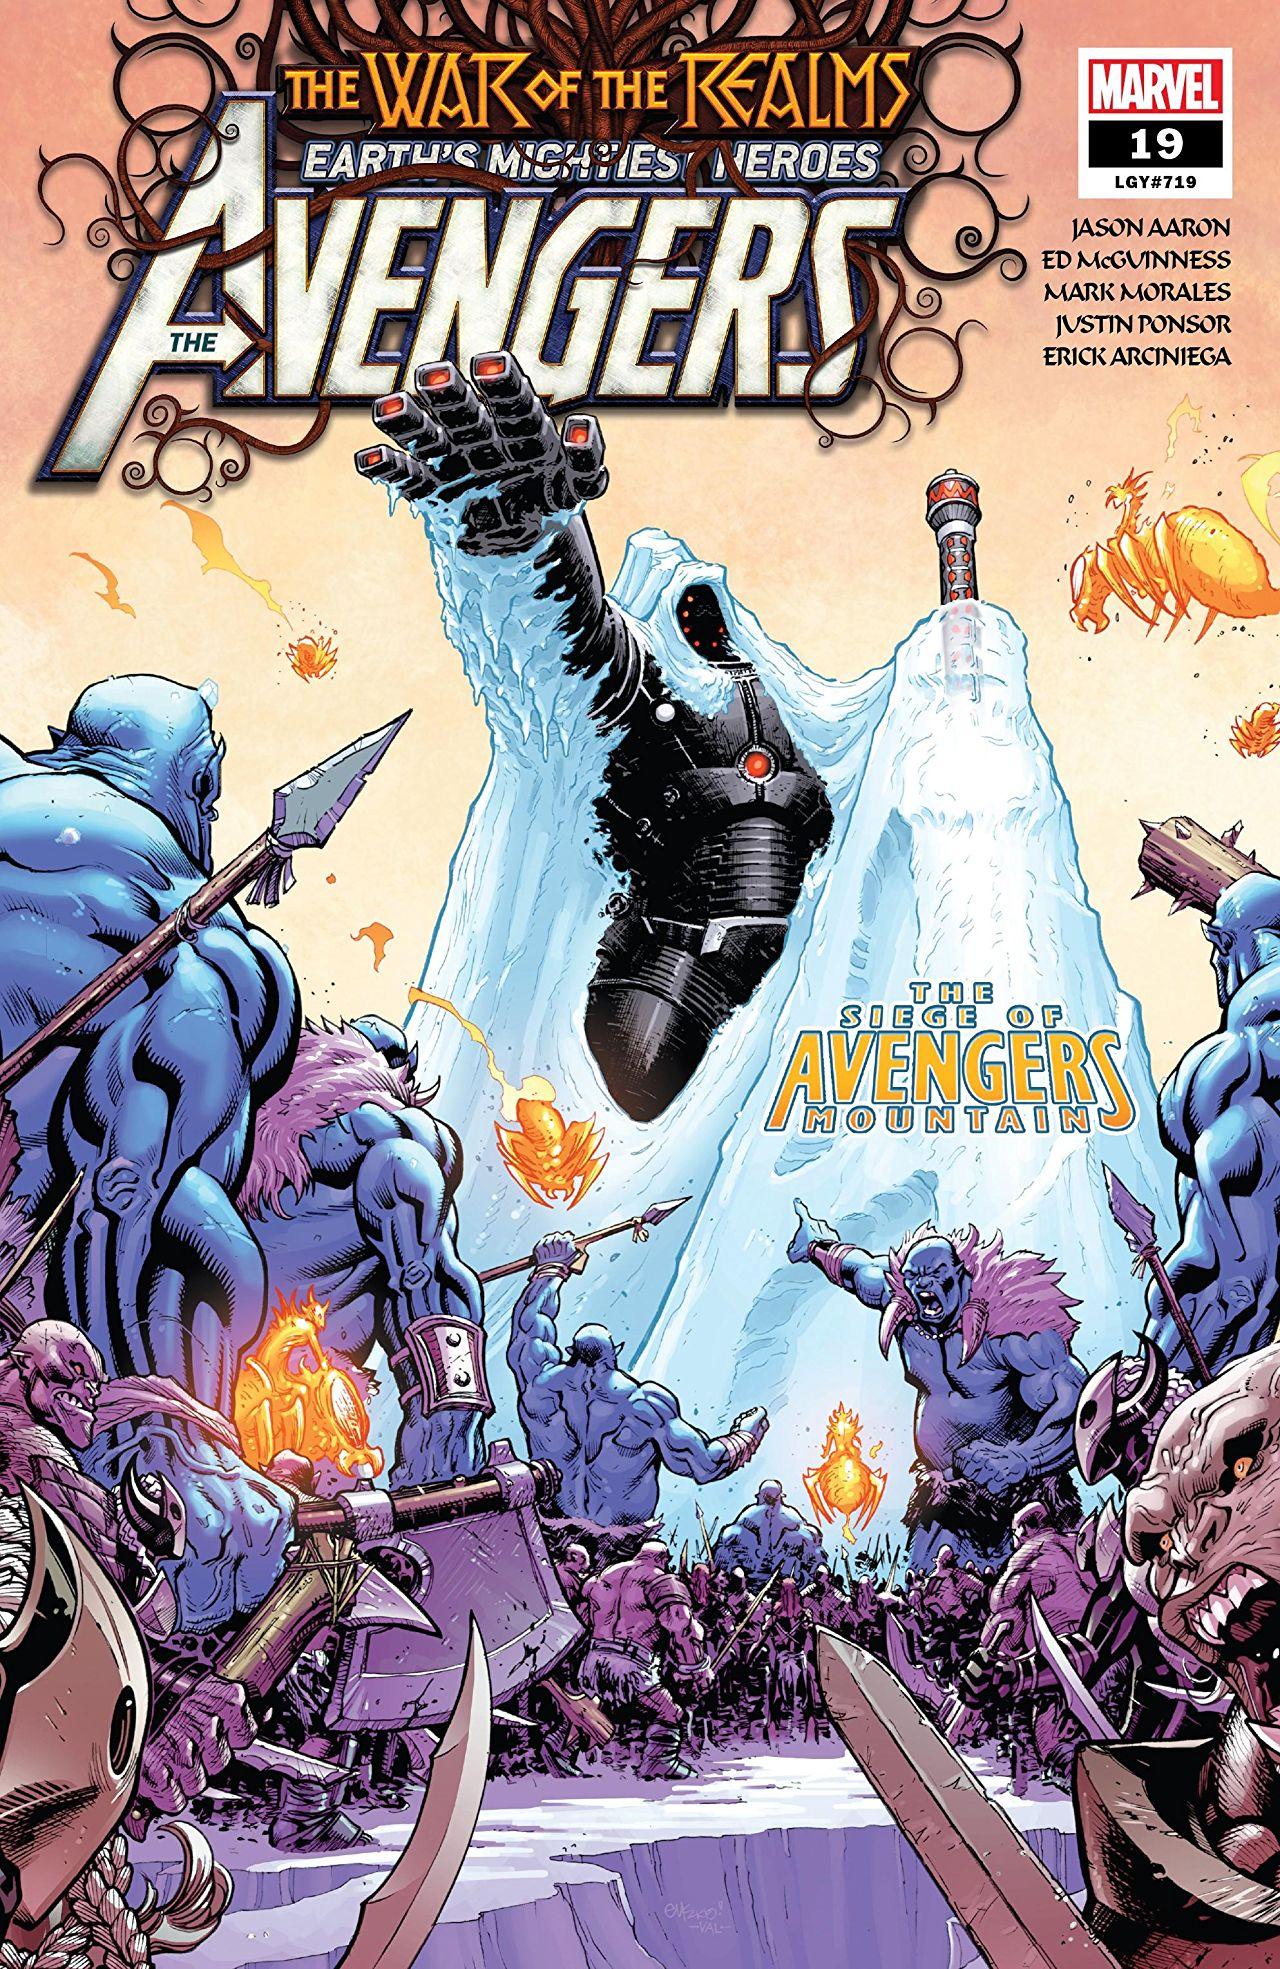 The Avengers Vol. 8 #19